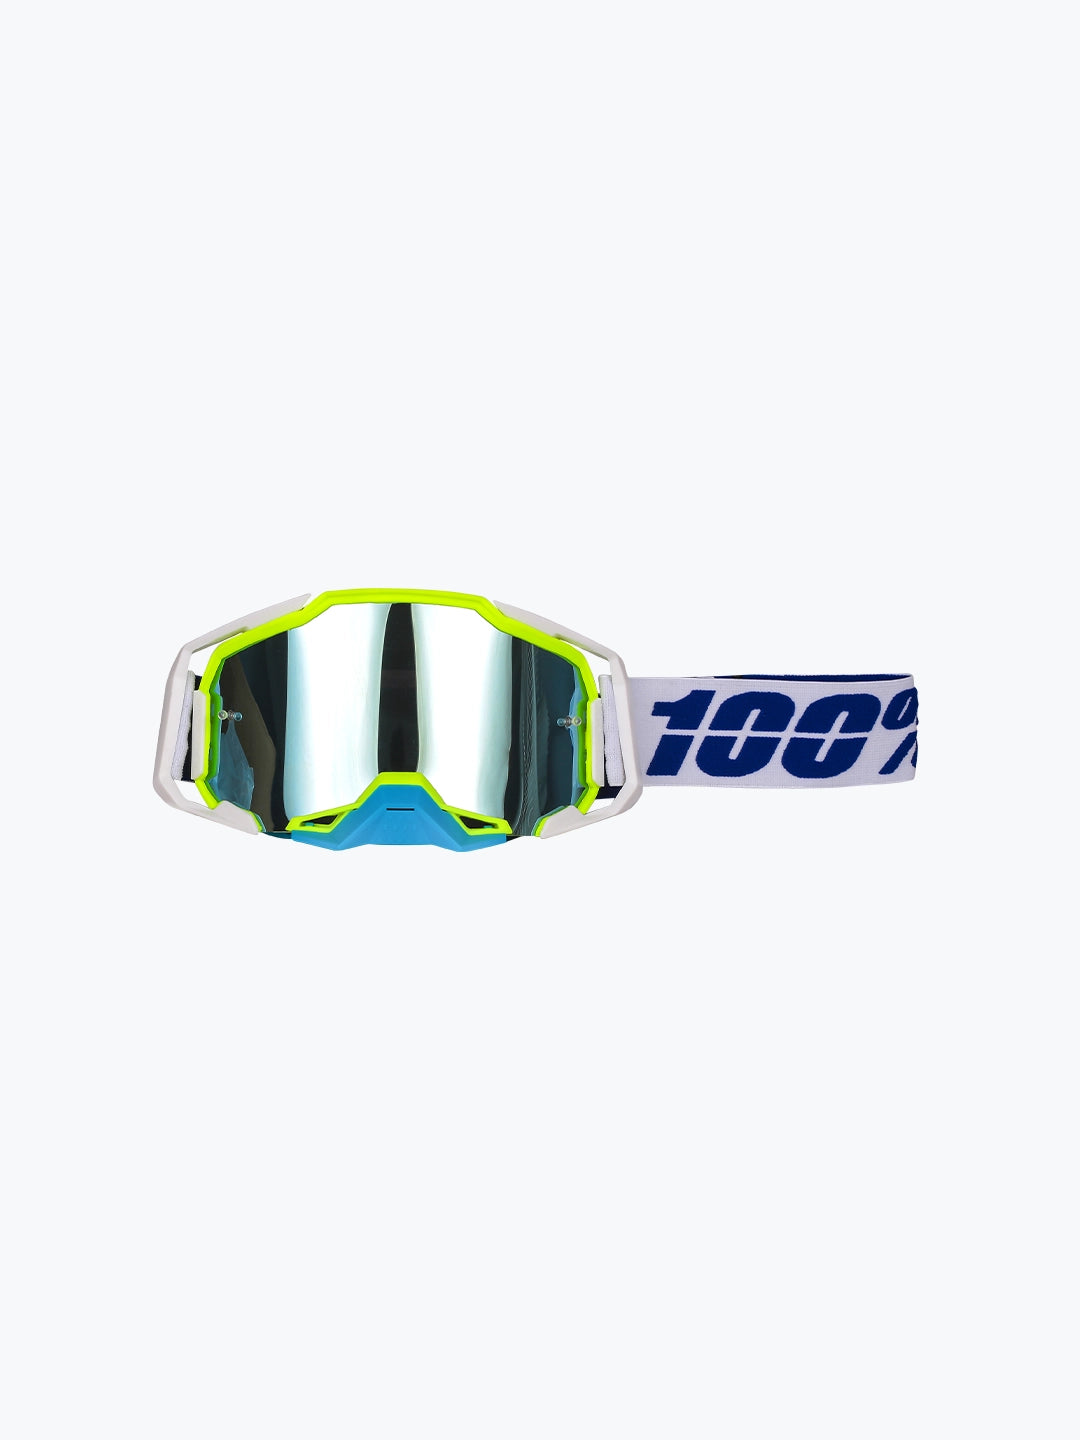 Goggles 100% - 147 White Green Tint